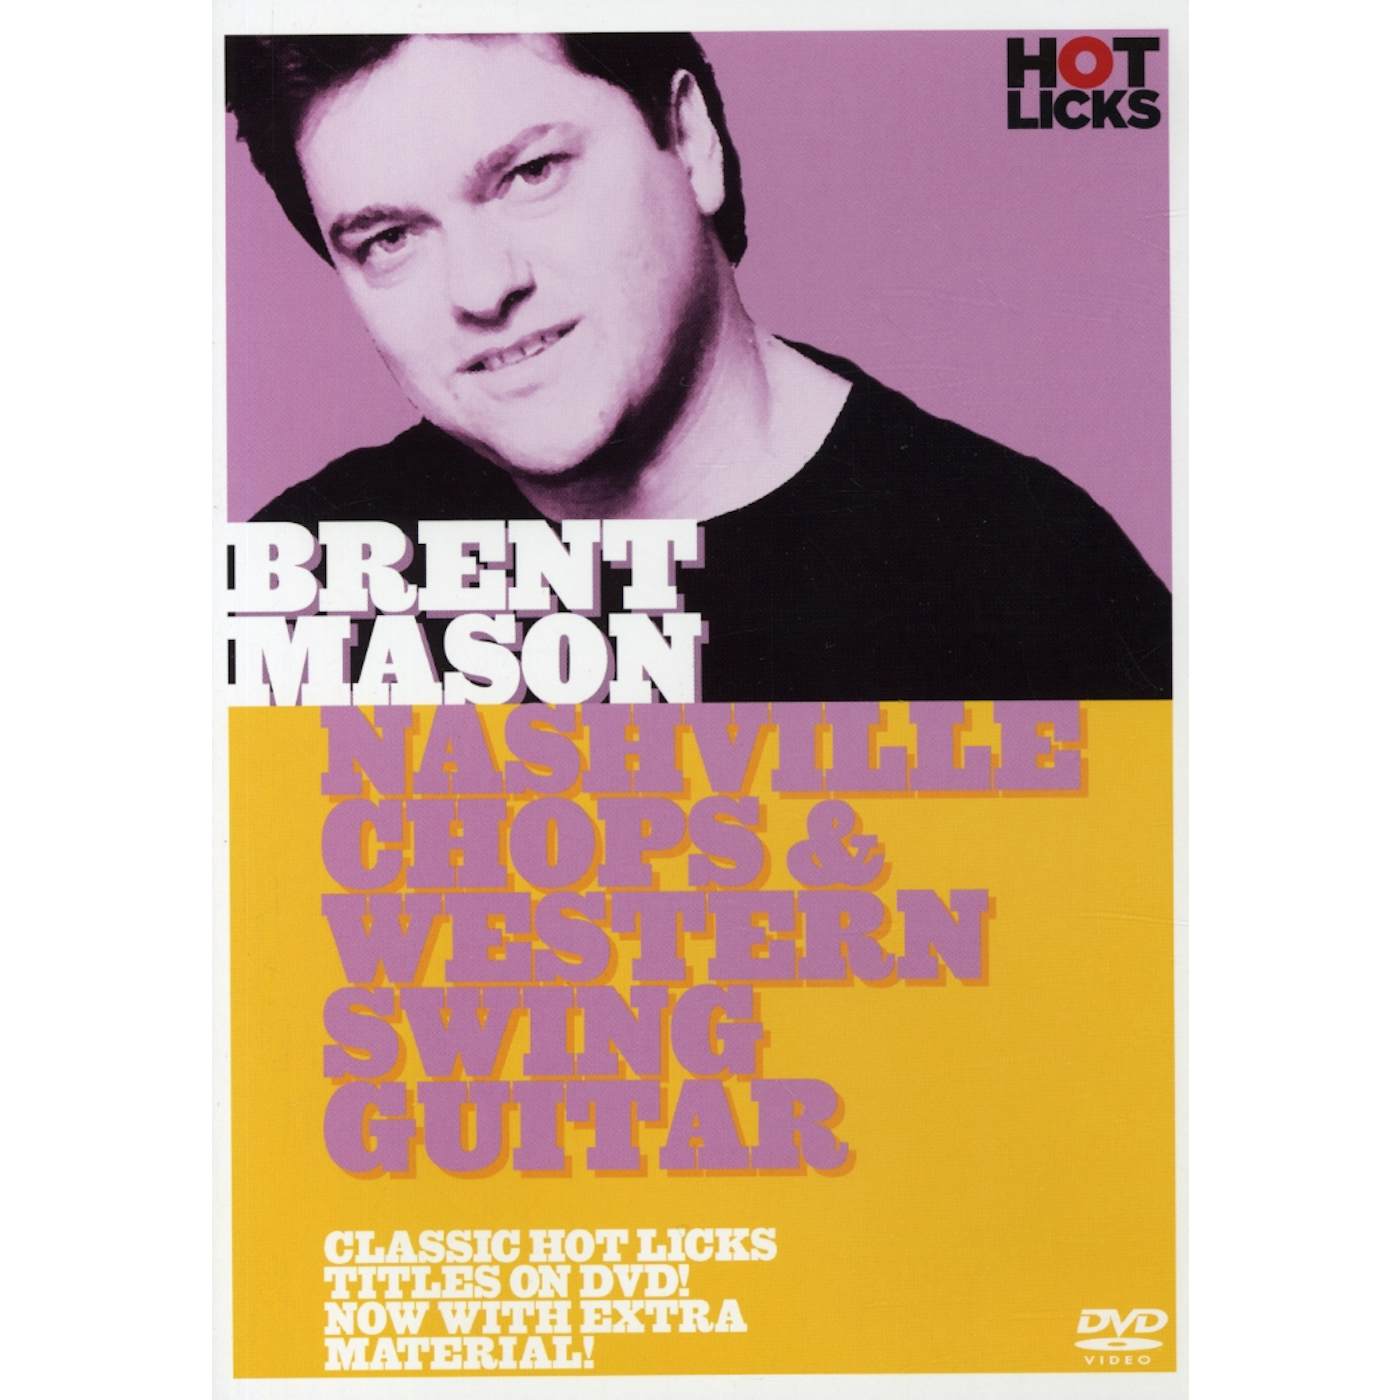 Brent Mason NASHVILLE CHOPS & WESTERN SWING GUITAR DVD